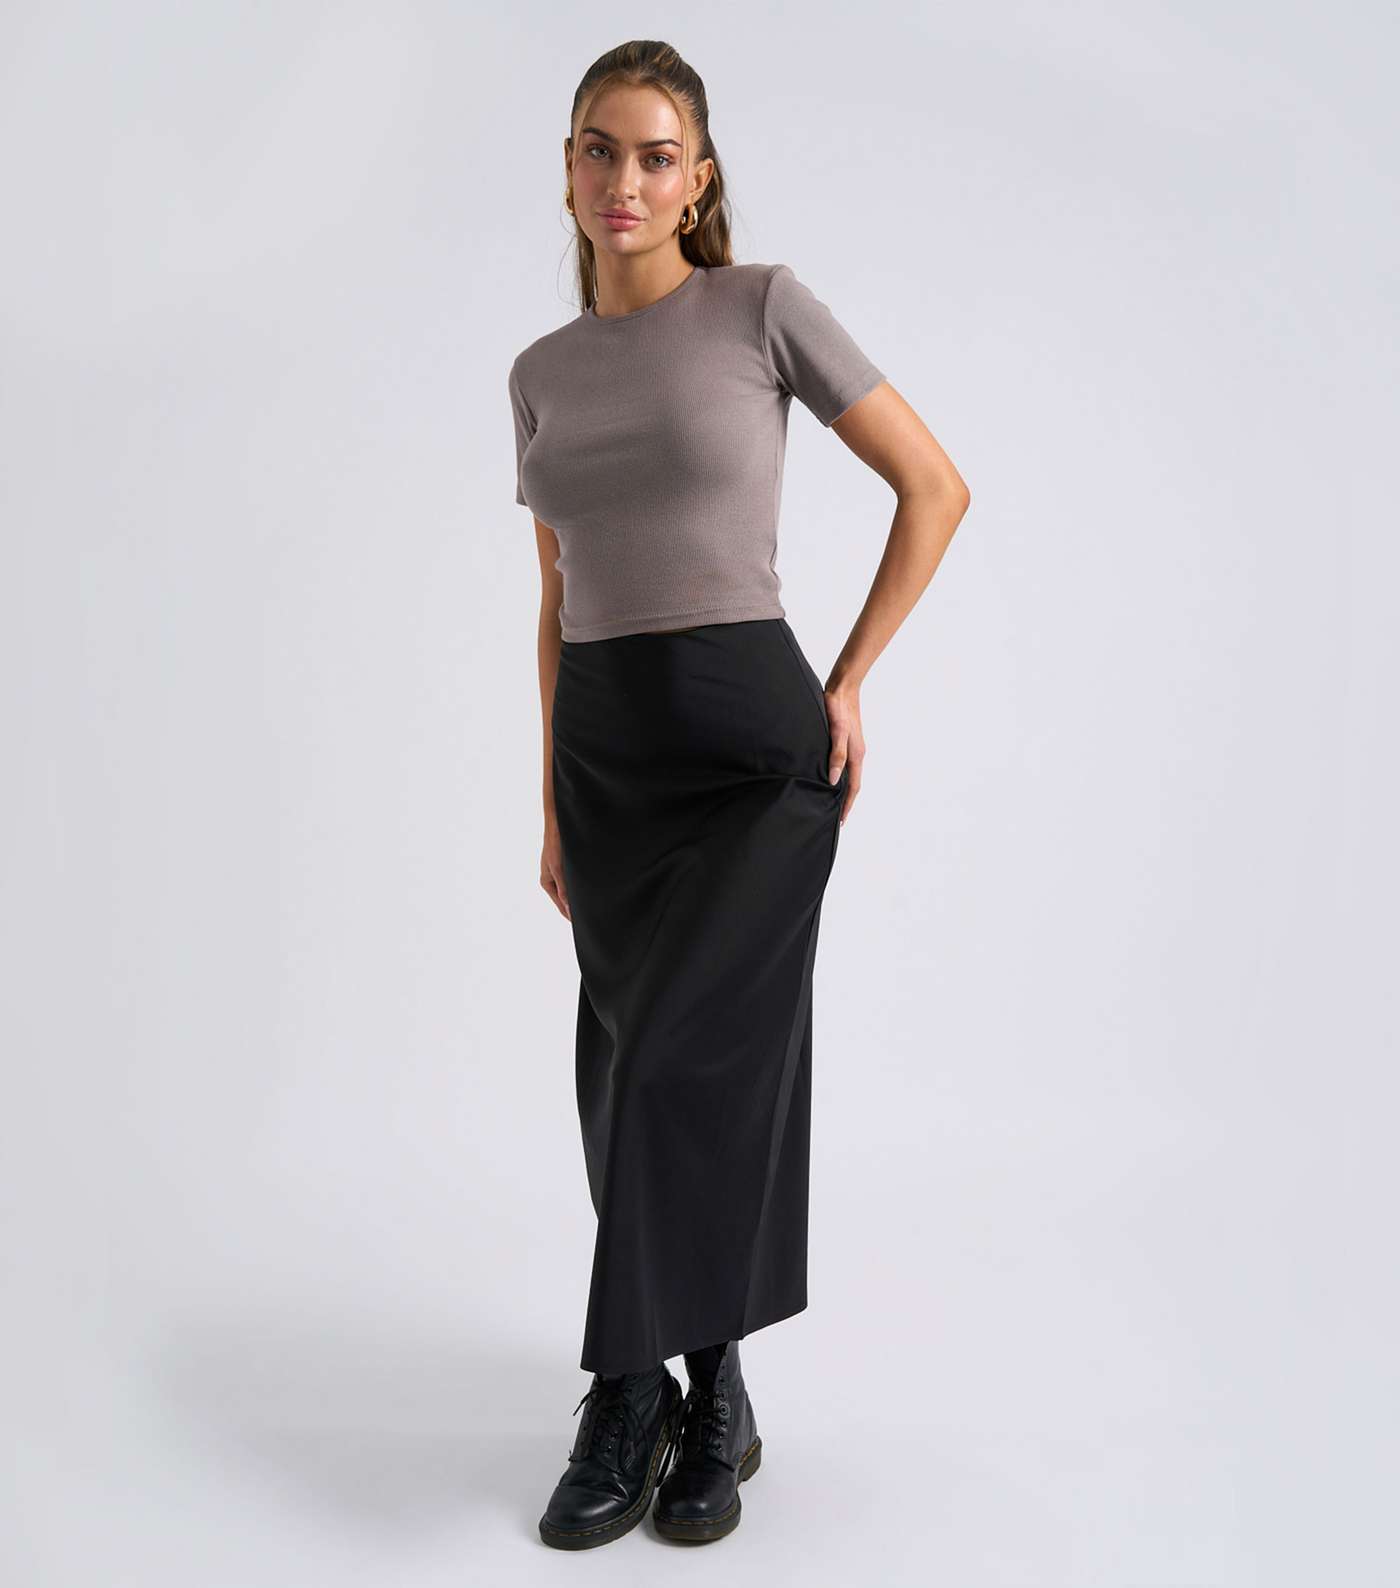 Urban Bliss Black Satin Maxi Skirt Image 2